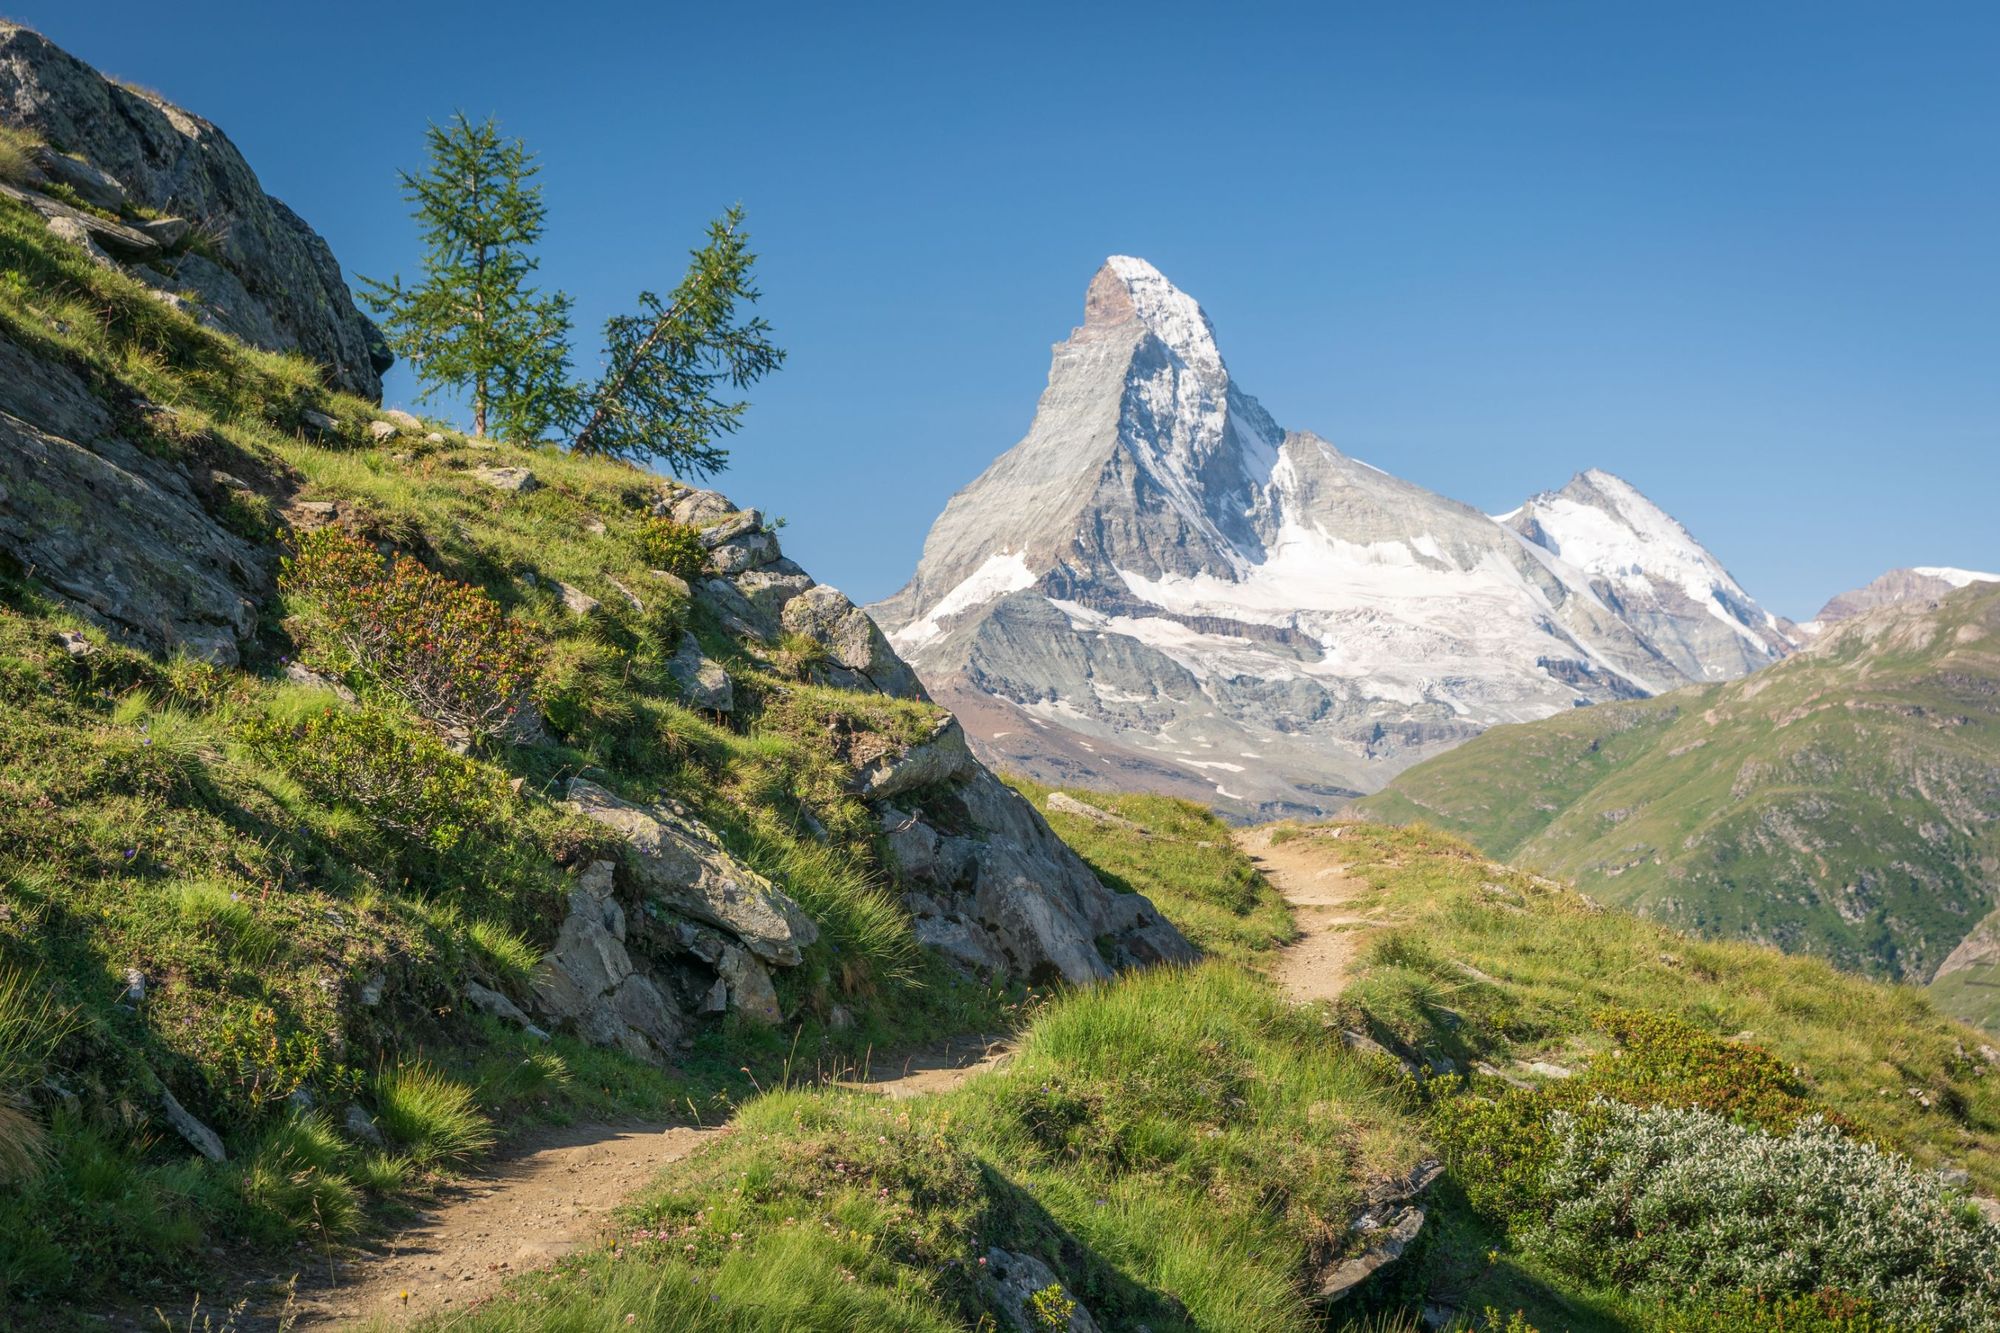 The Europaweg trail leads the eye trough lush, green meadows to the distant Matterhorn. Photo: Getty